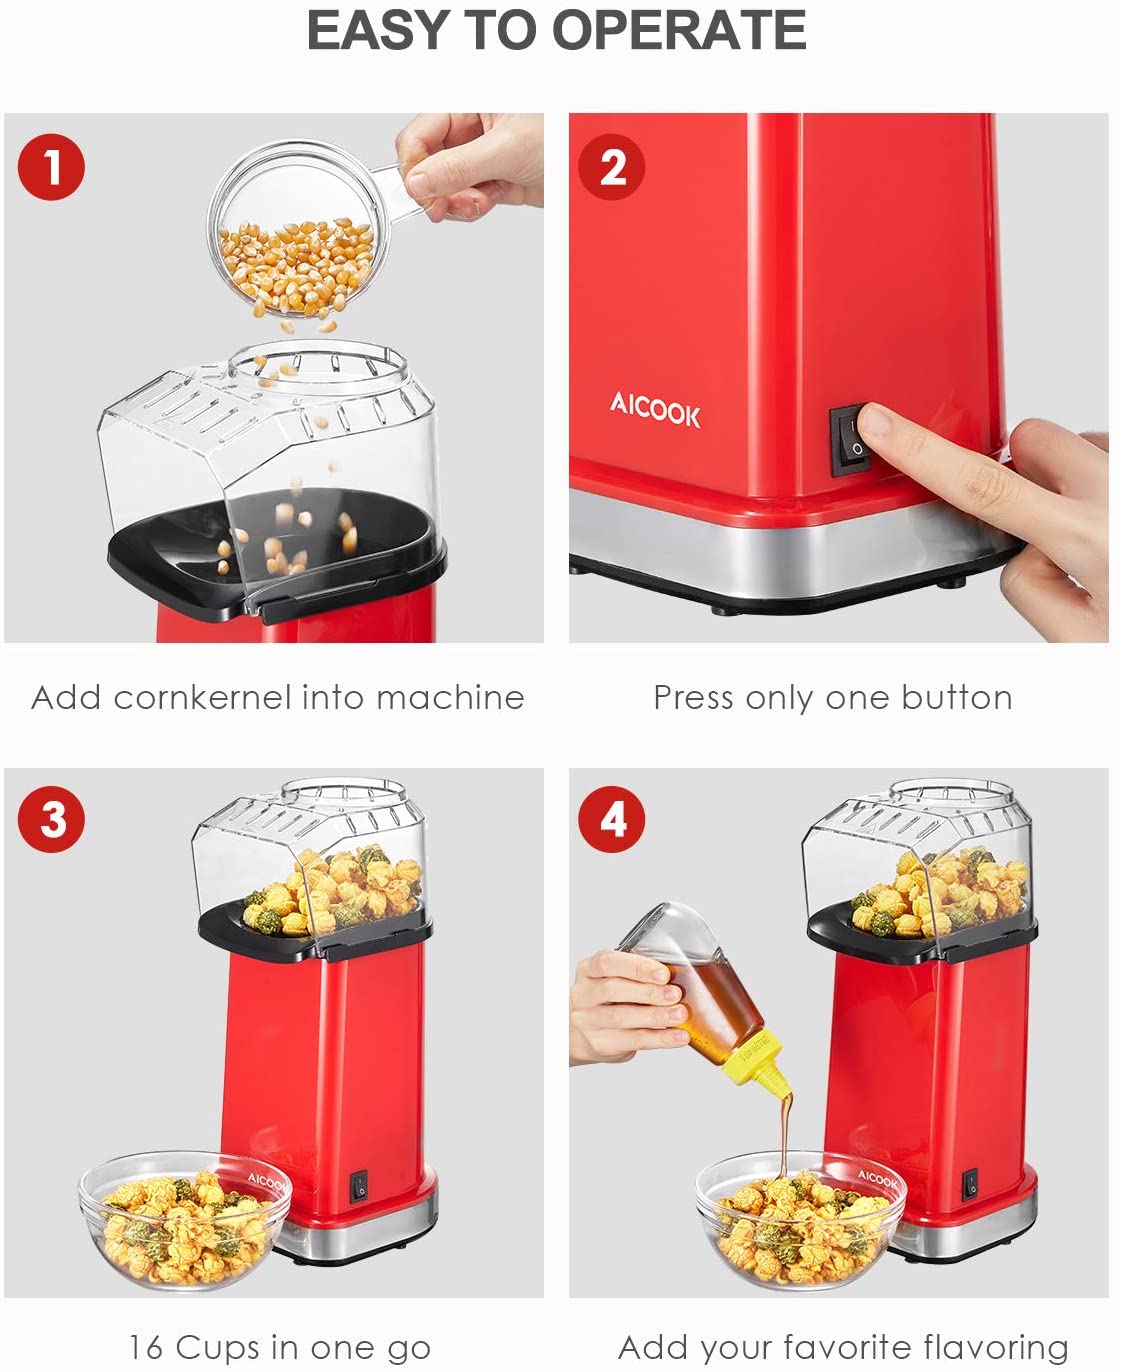 User manual Beautiful Hot Air Popcorn Maker (English - 40 pages)